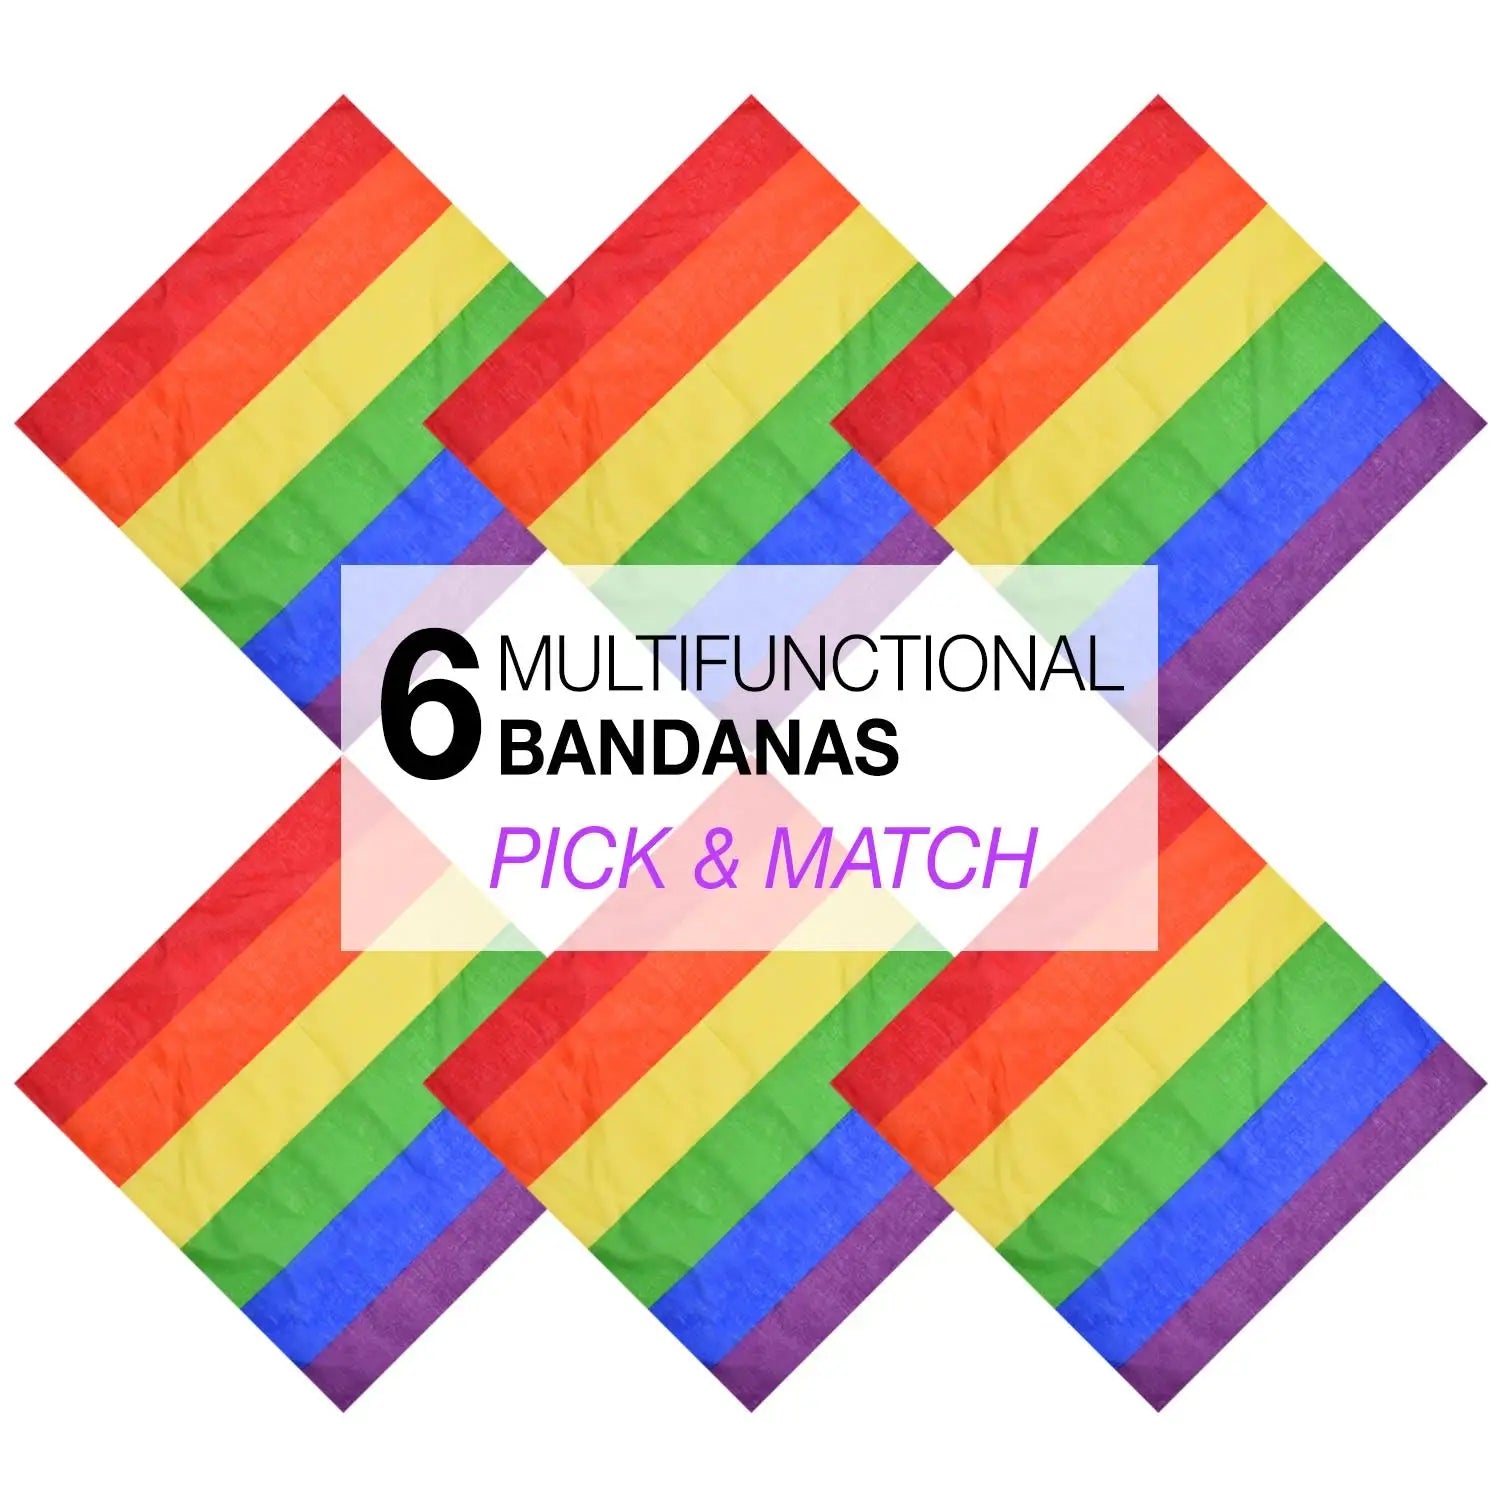 Multicultural pandas pick and match on rainbow flag bandana set with pride rainbow flag design.